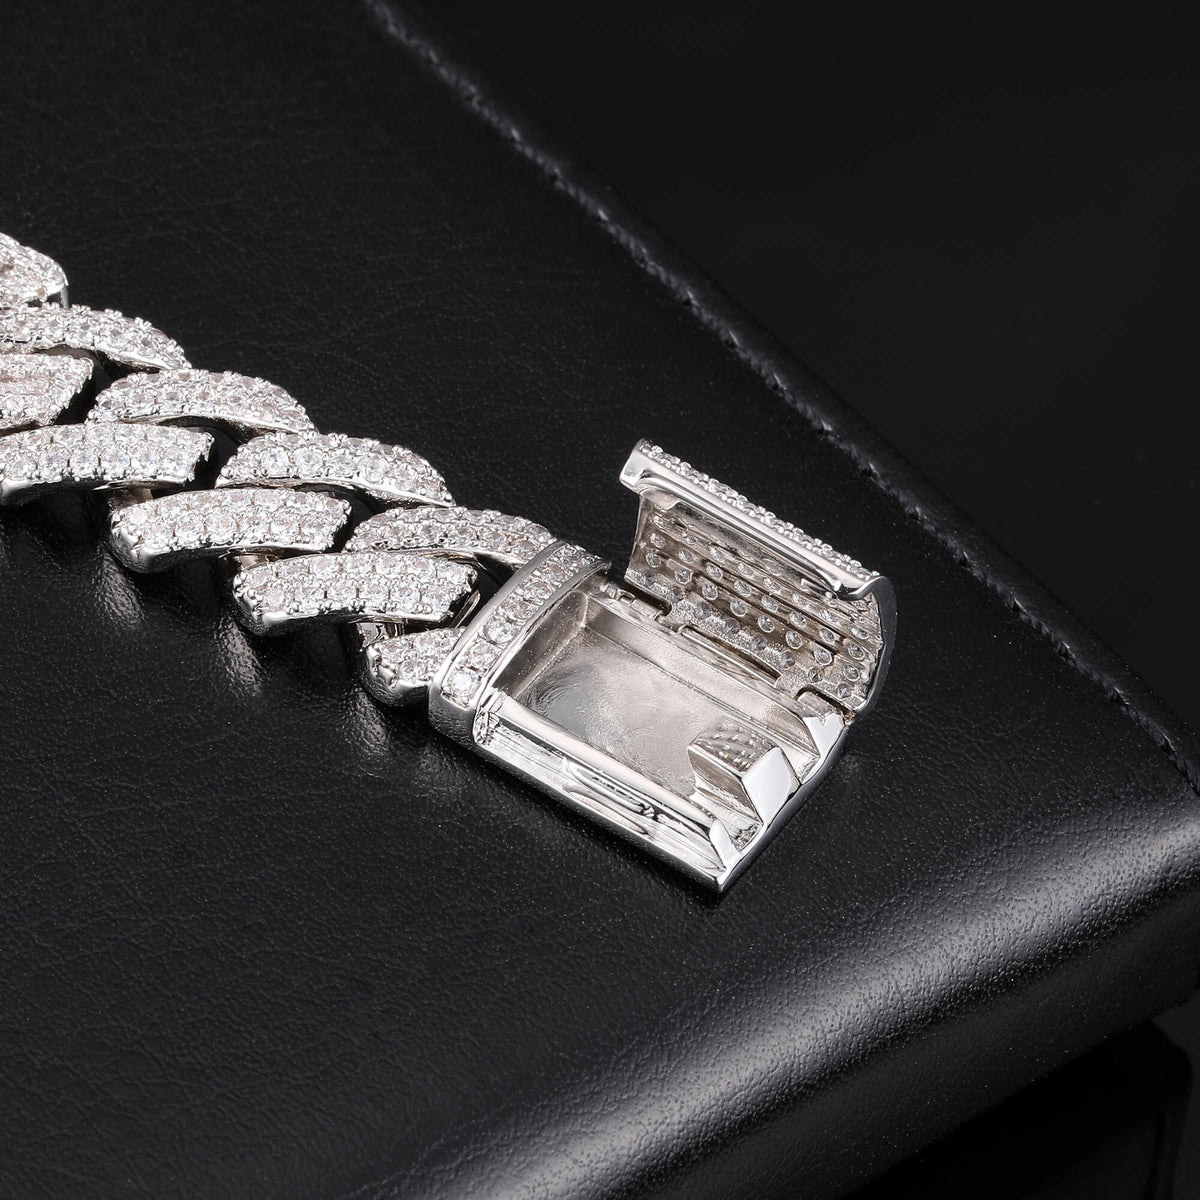 ICED OUT - 15mm Prong Baguette Gucci Curb Bracelet - Icezzle